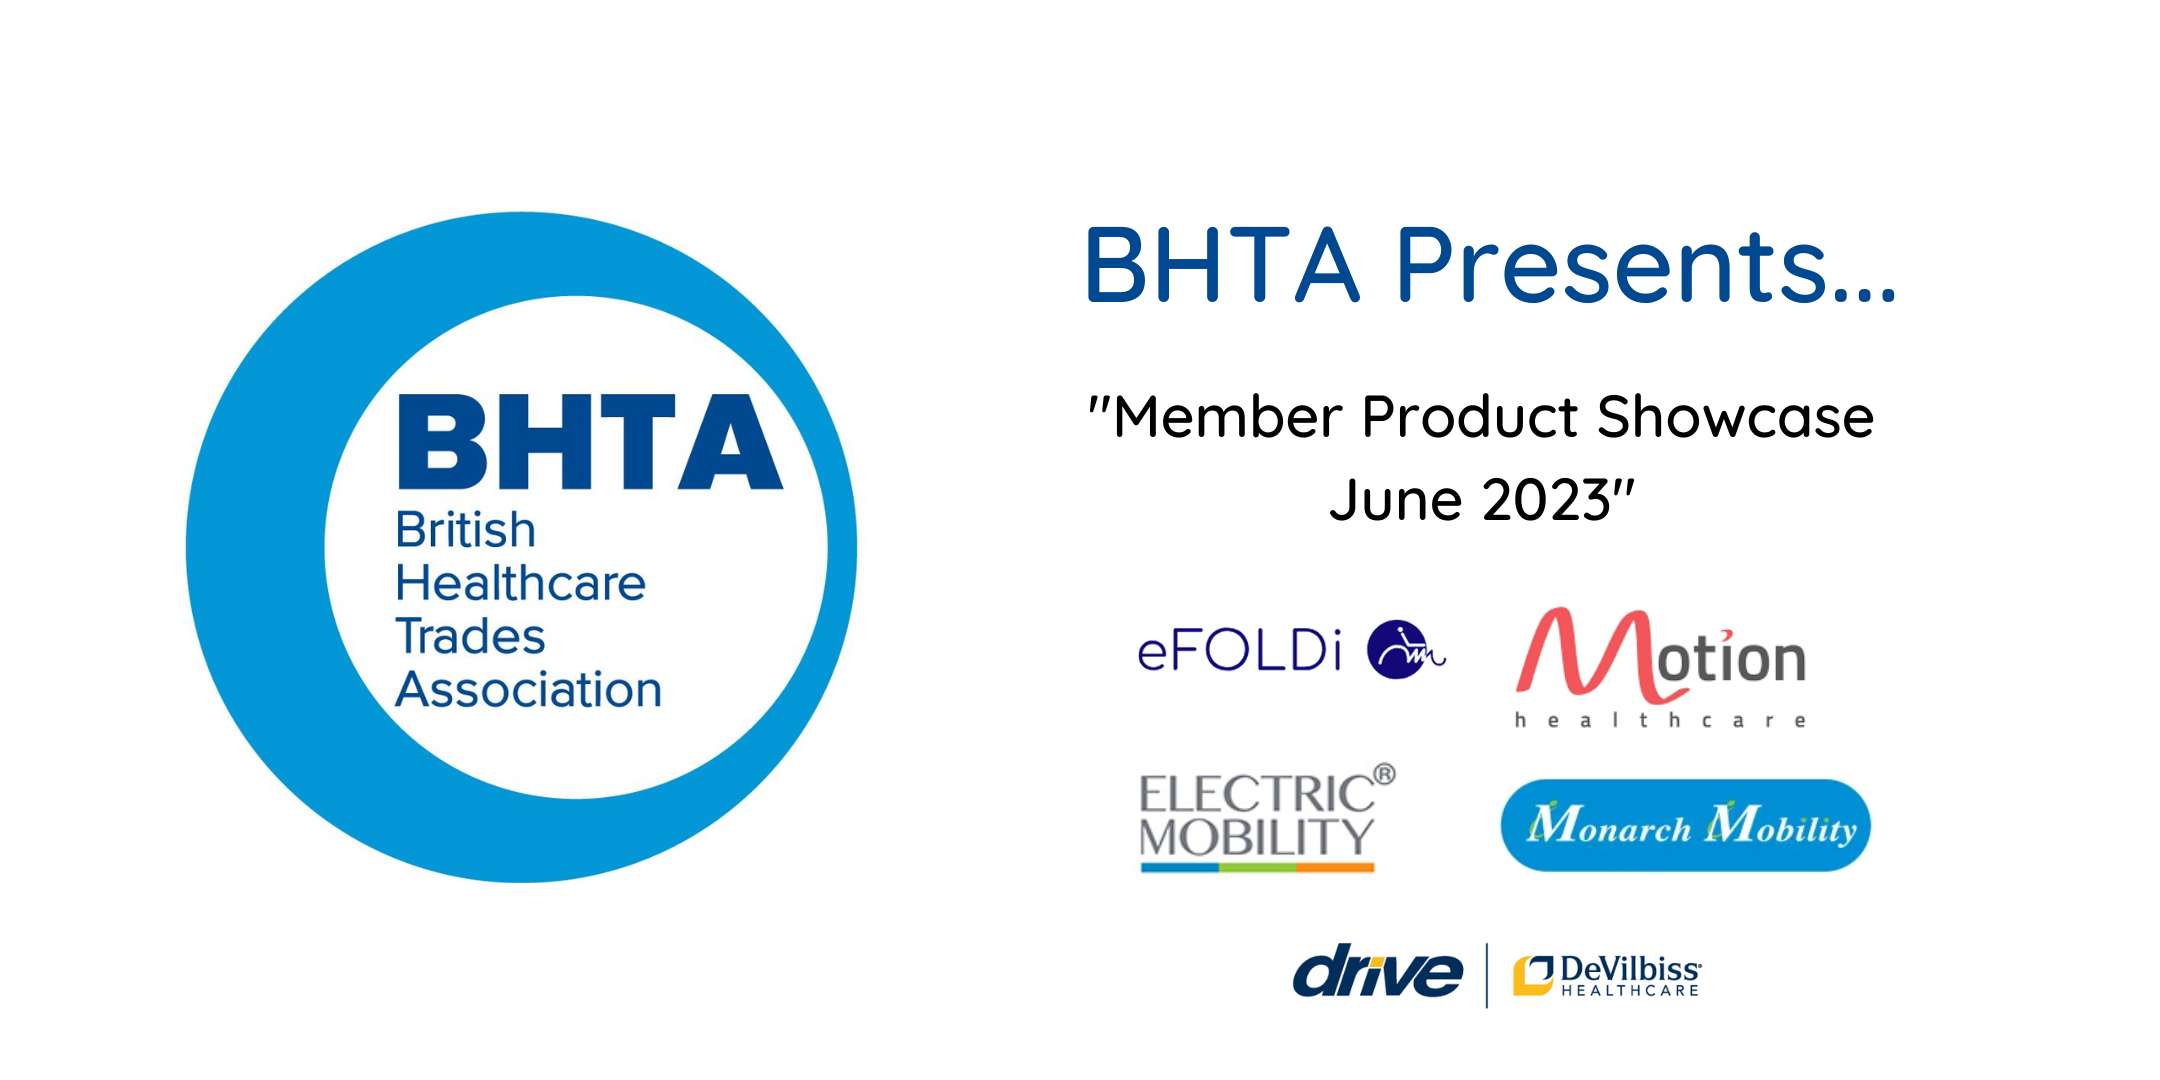 BHTA礼物... “2023年6月会员产品展示会”